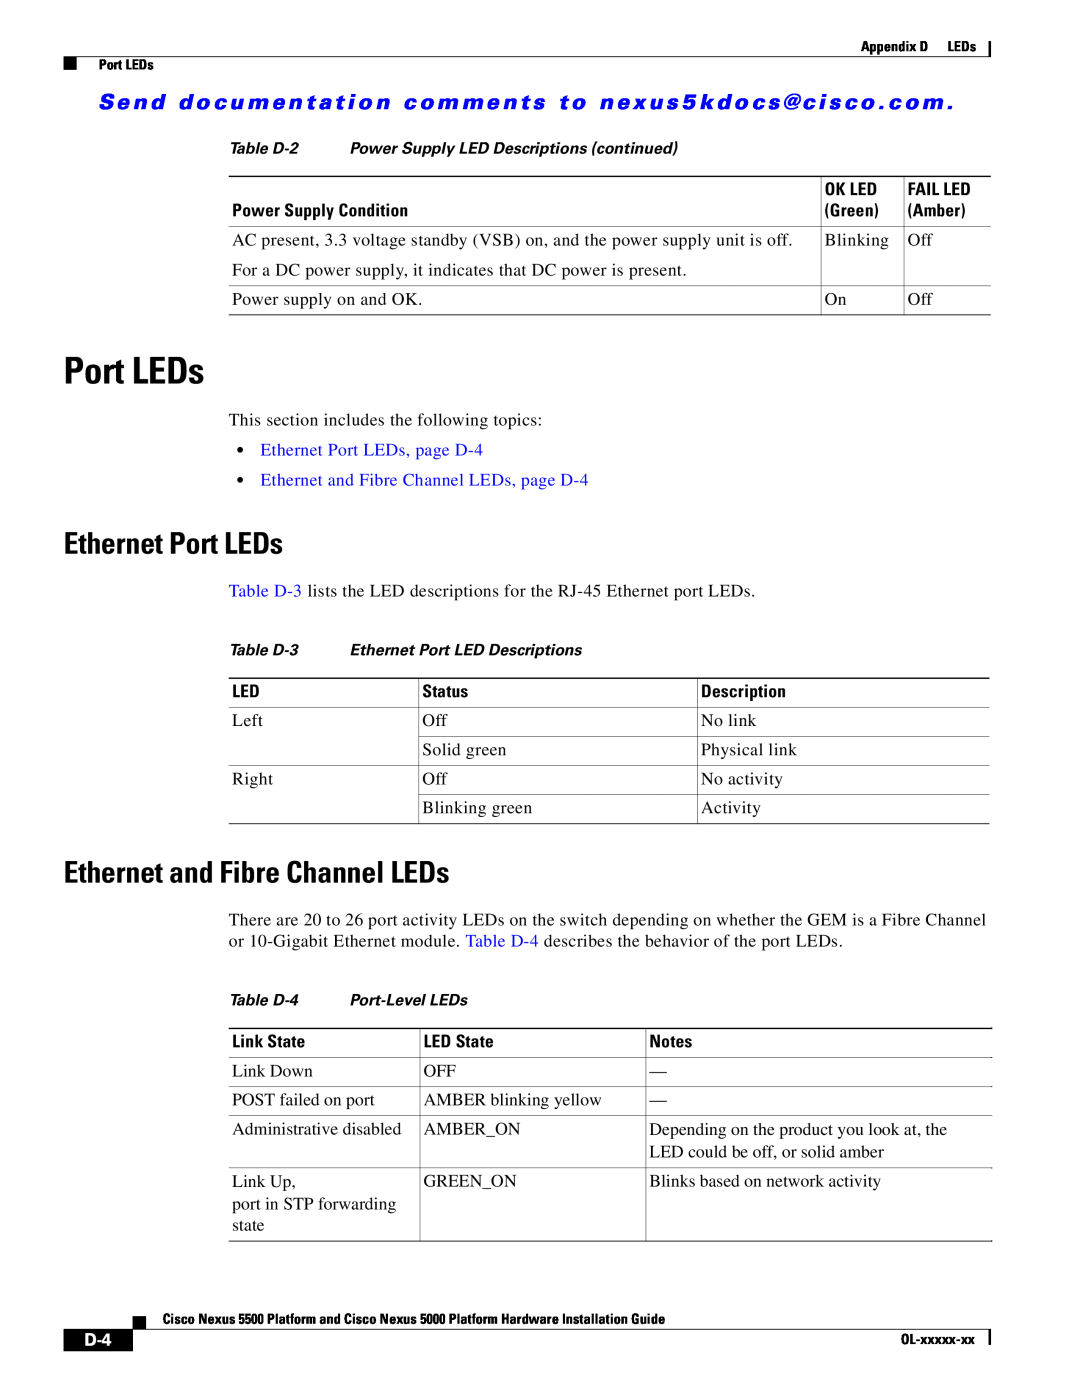 Cisco Systems 5000 manual Ethernet and Fibre Channel LEDs, Ethernet Port LEDs, page D-4 